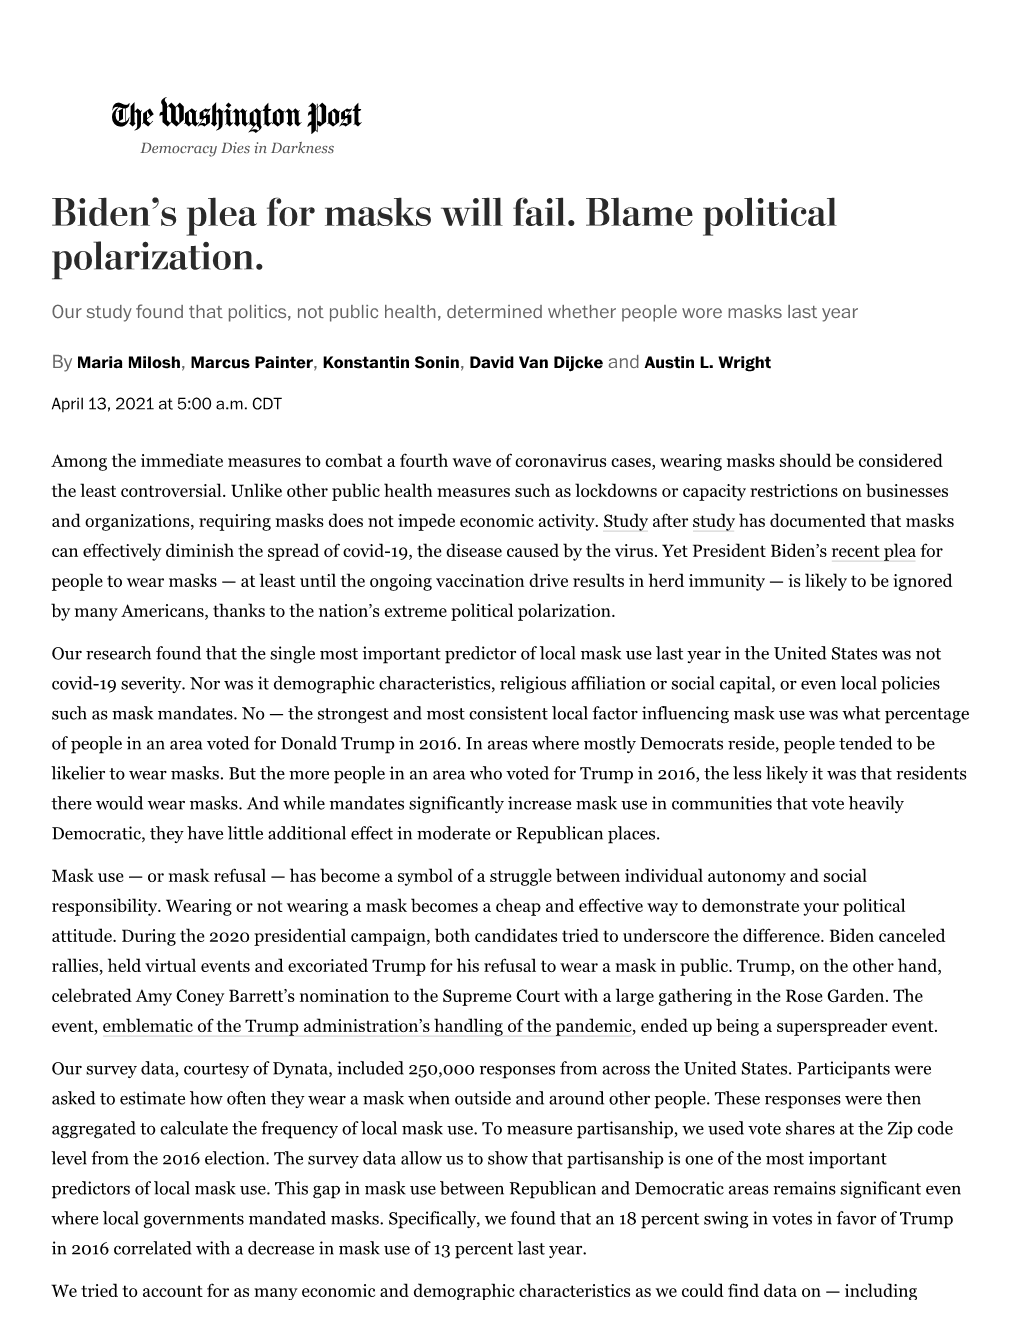 Biden's Plea for Masks Will Fail. Blame Political Polarization